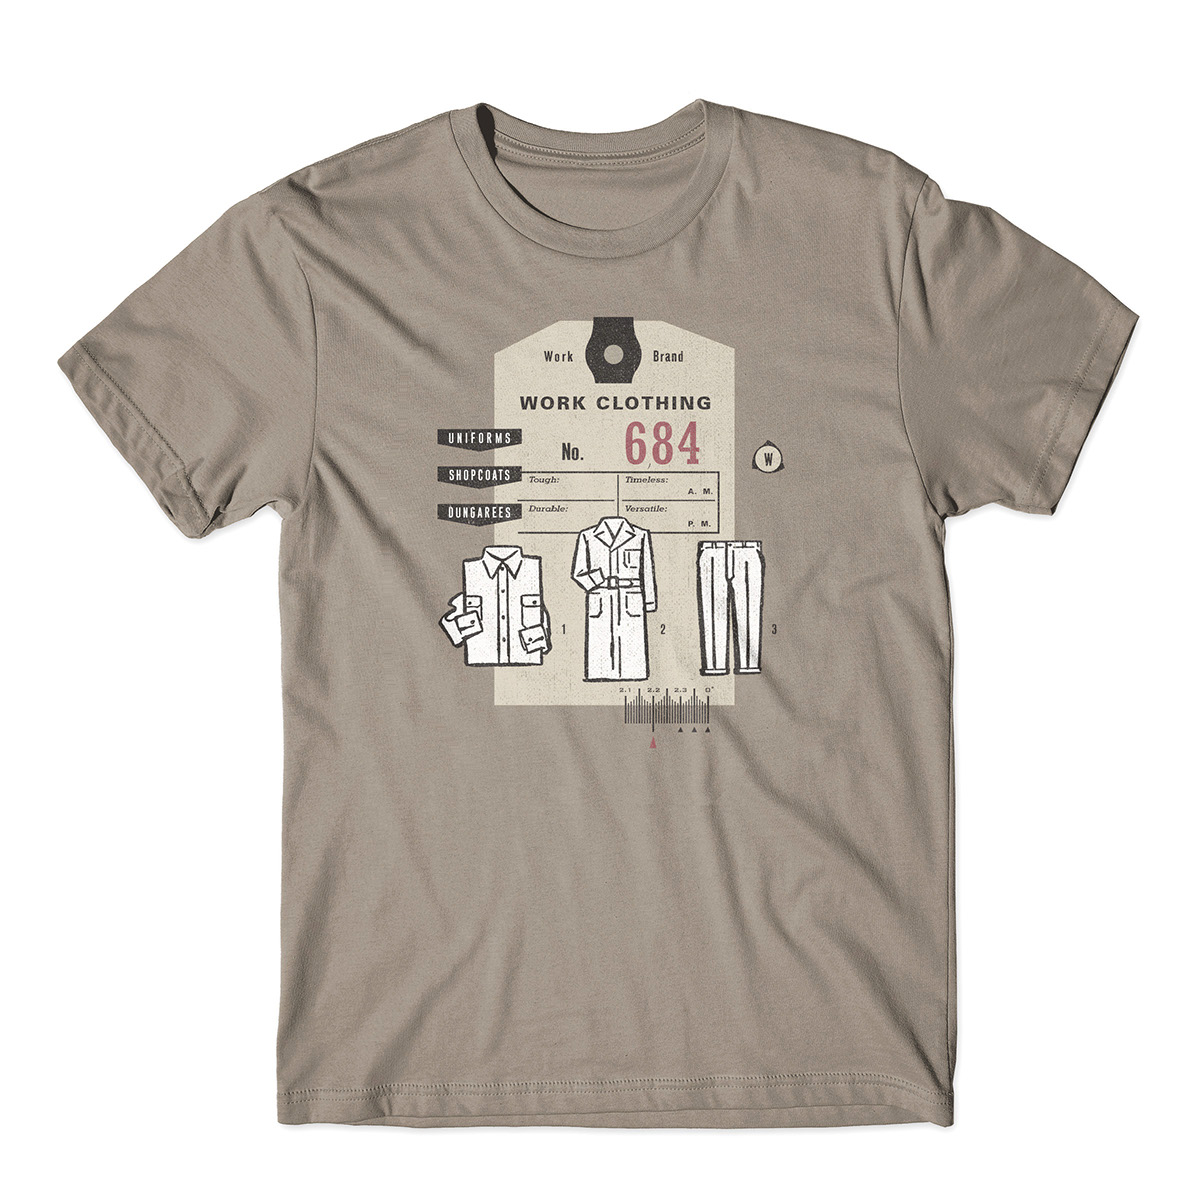 Clothing T Shirt industrial grunge products Retail tag hang tag Retro graphic design hang-tag